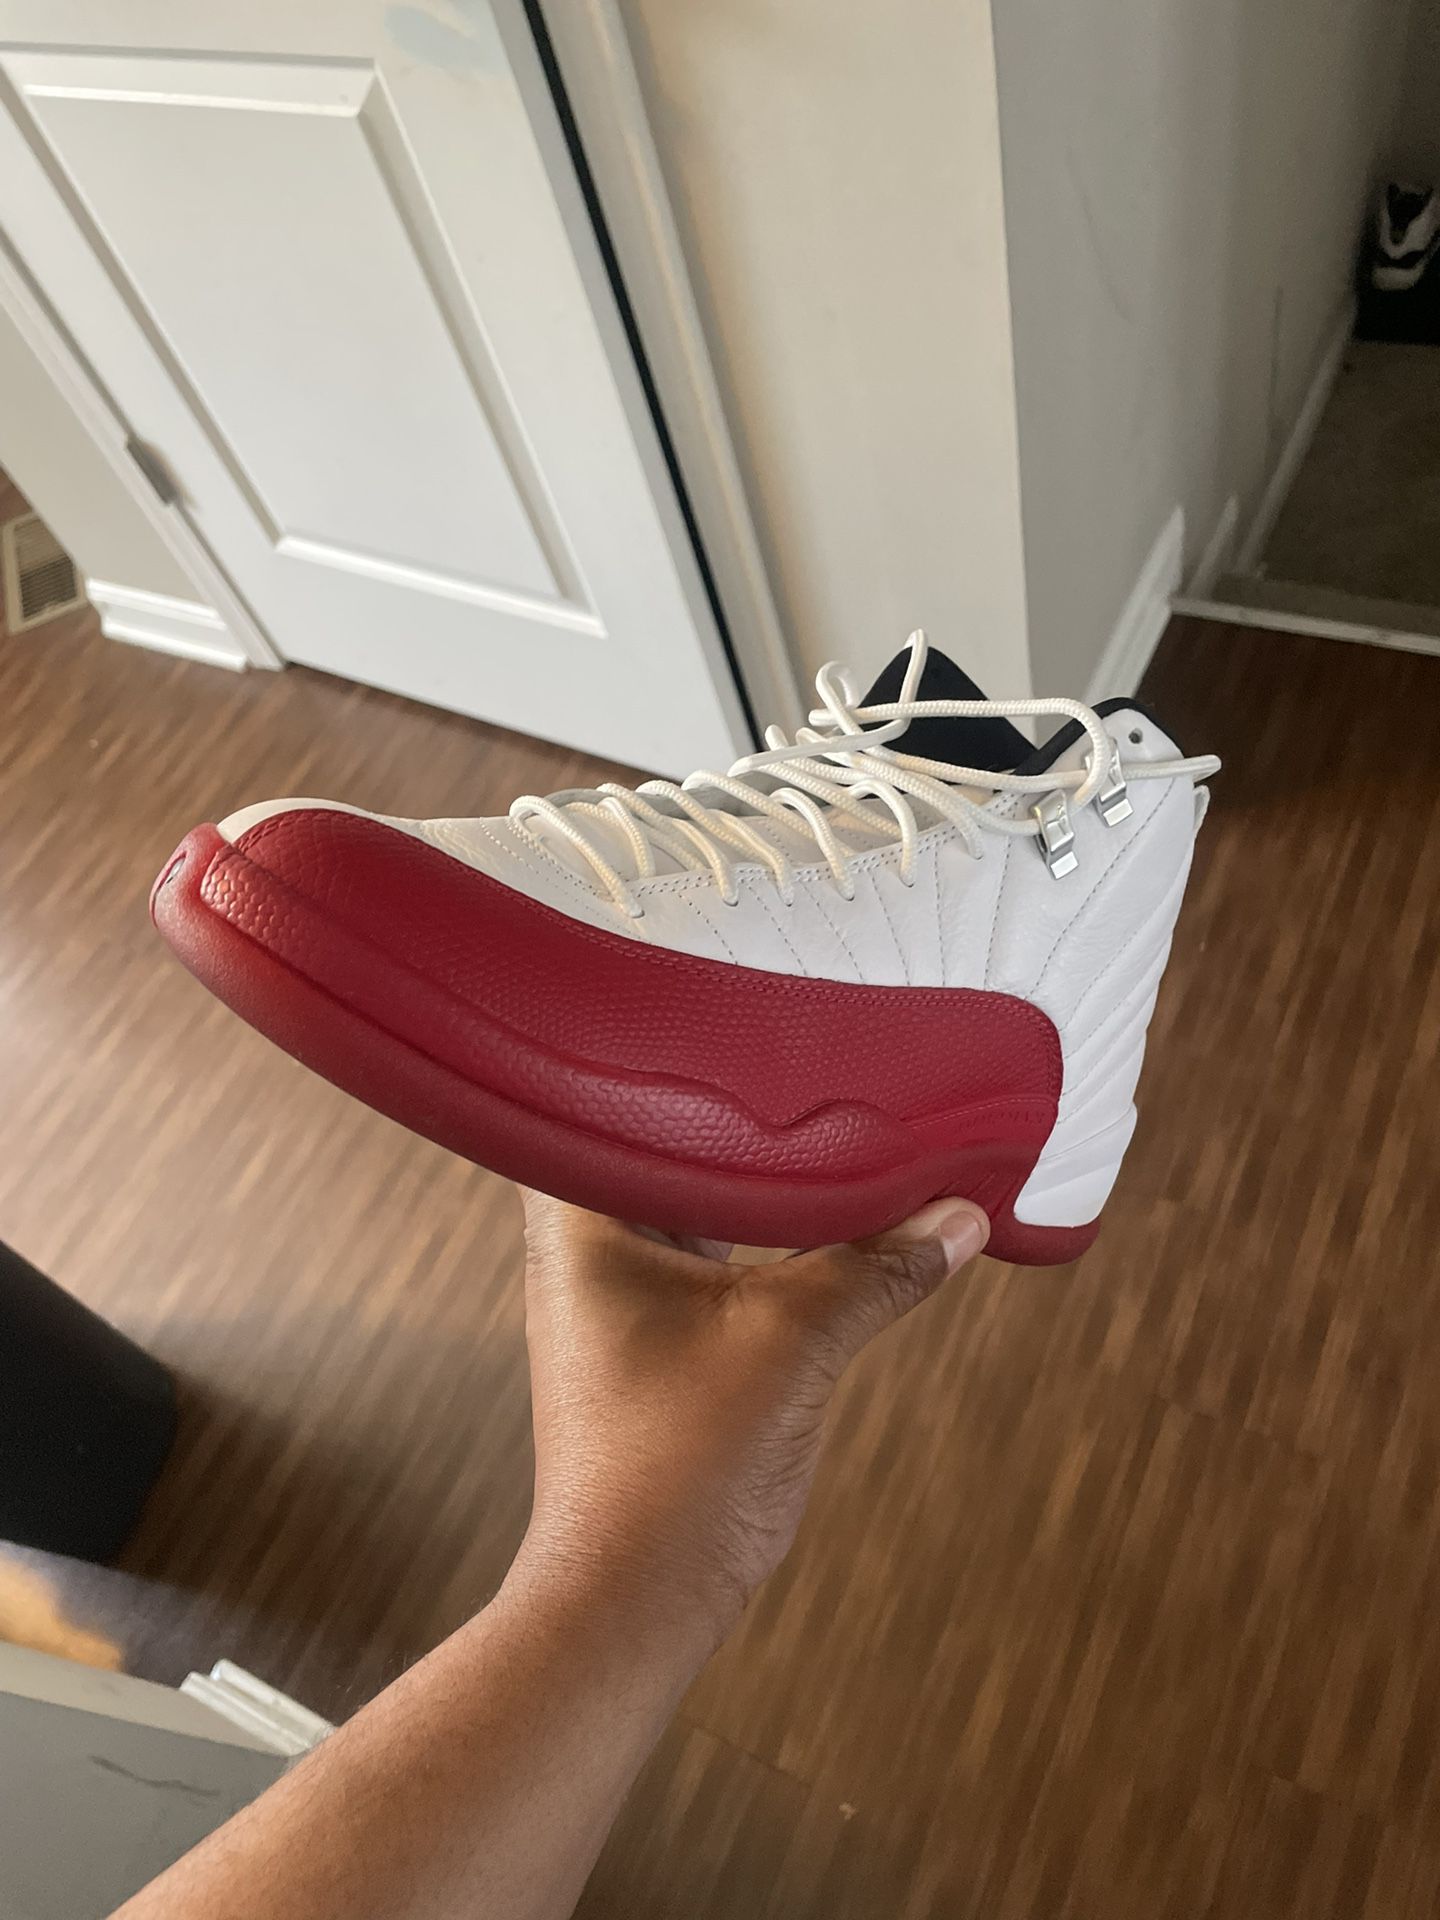 Jordan 12’s Cherry’s Size 10